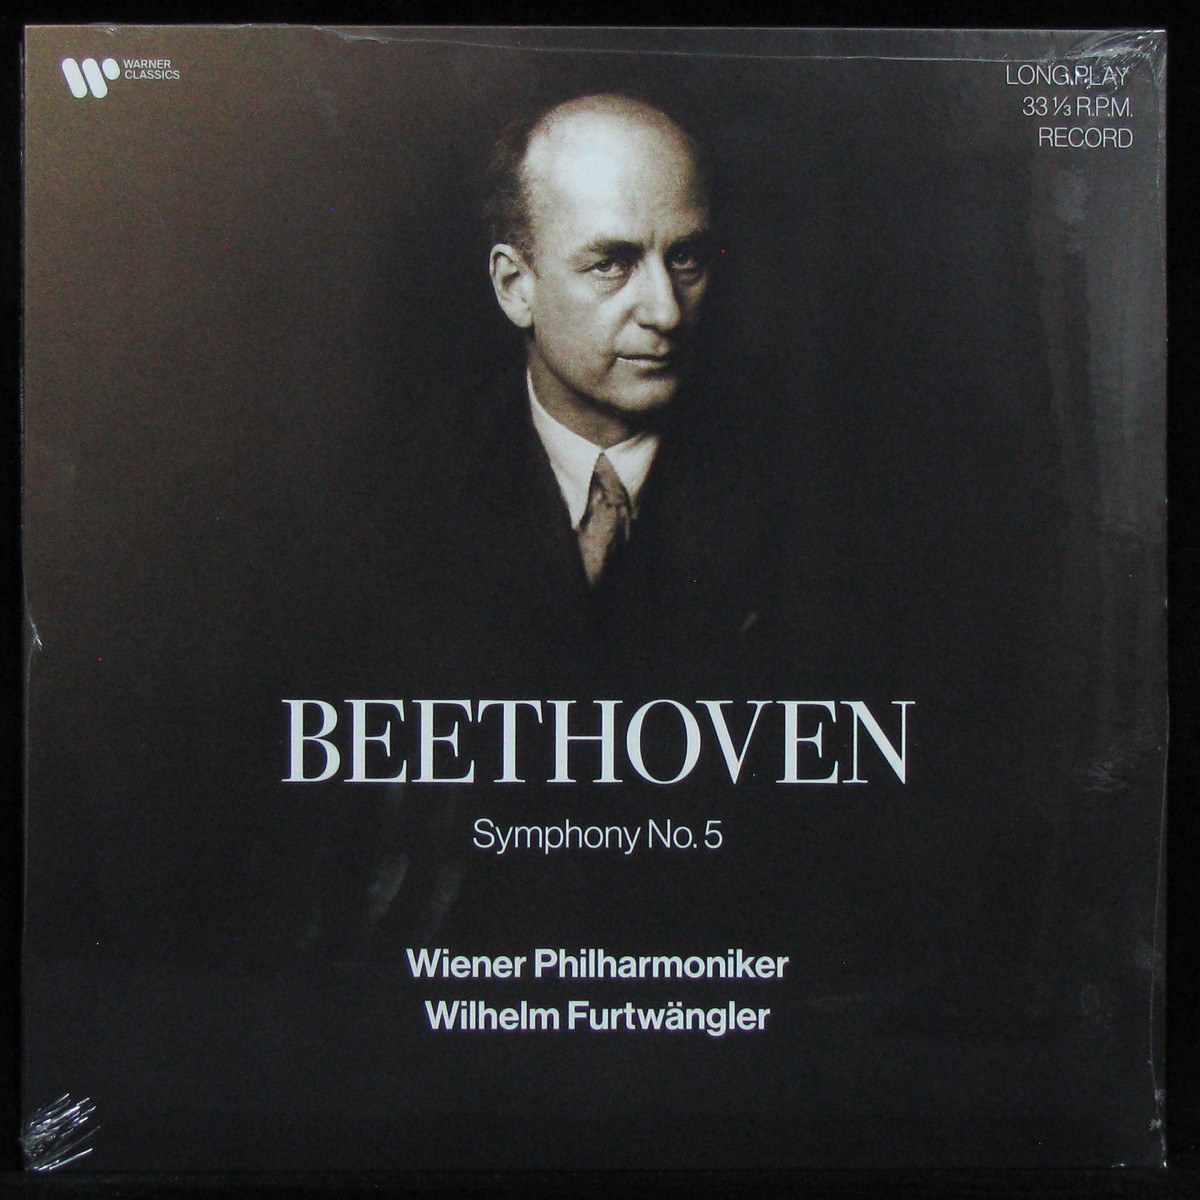 Beethoveen: Symphony No. 5